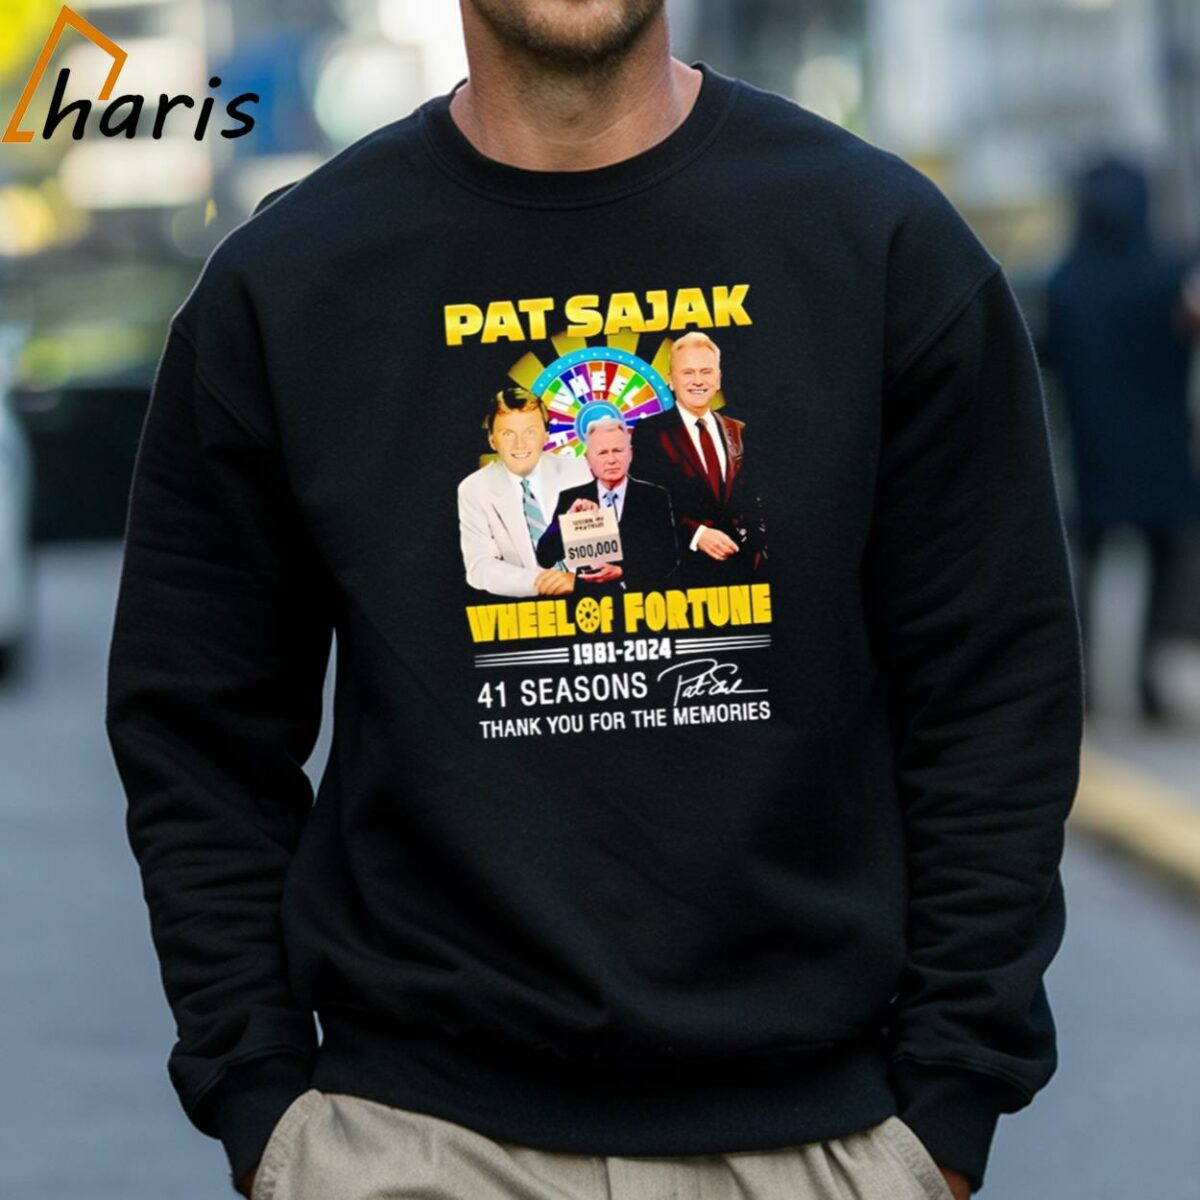 Pat Sajak Wheel Of Fortune 1981 2024 41 Seasons Thank You For The Memories Shirt 4 Sweatshirt